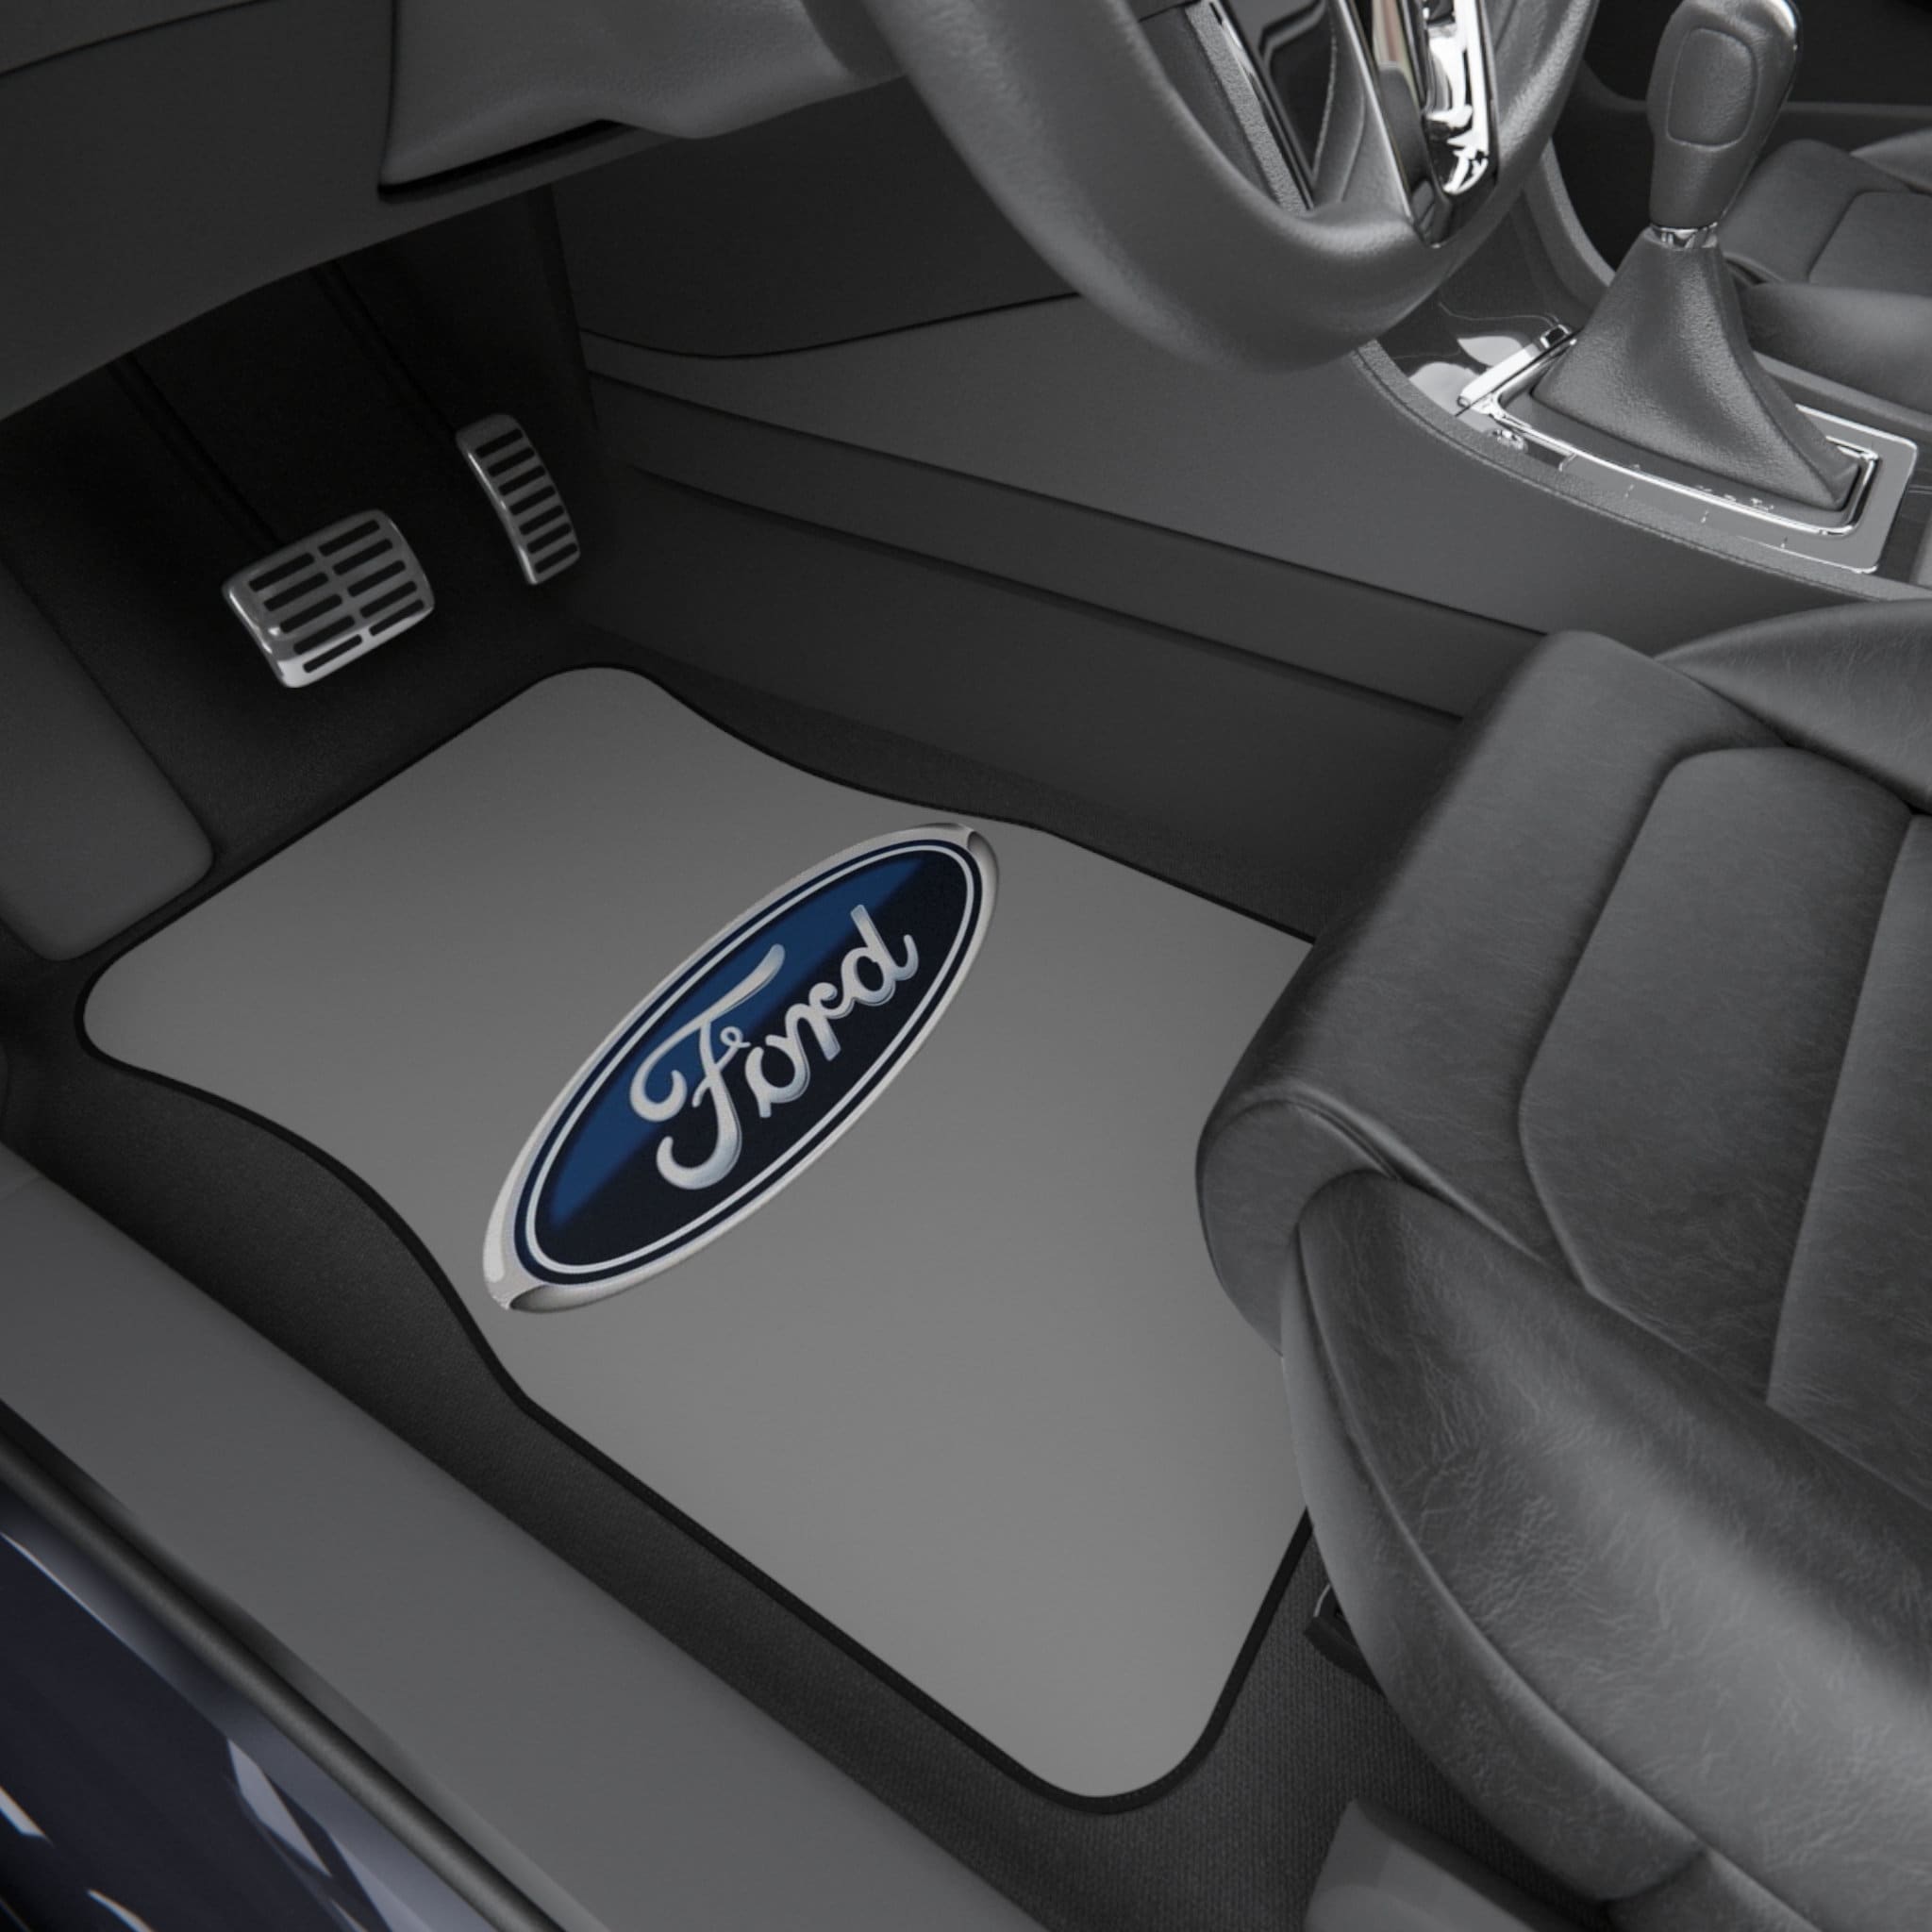 4D Premium Rubber Car Floor Mat Set Suitable for Ford Fiesta Year